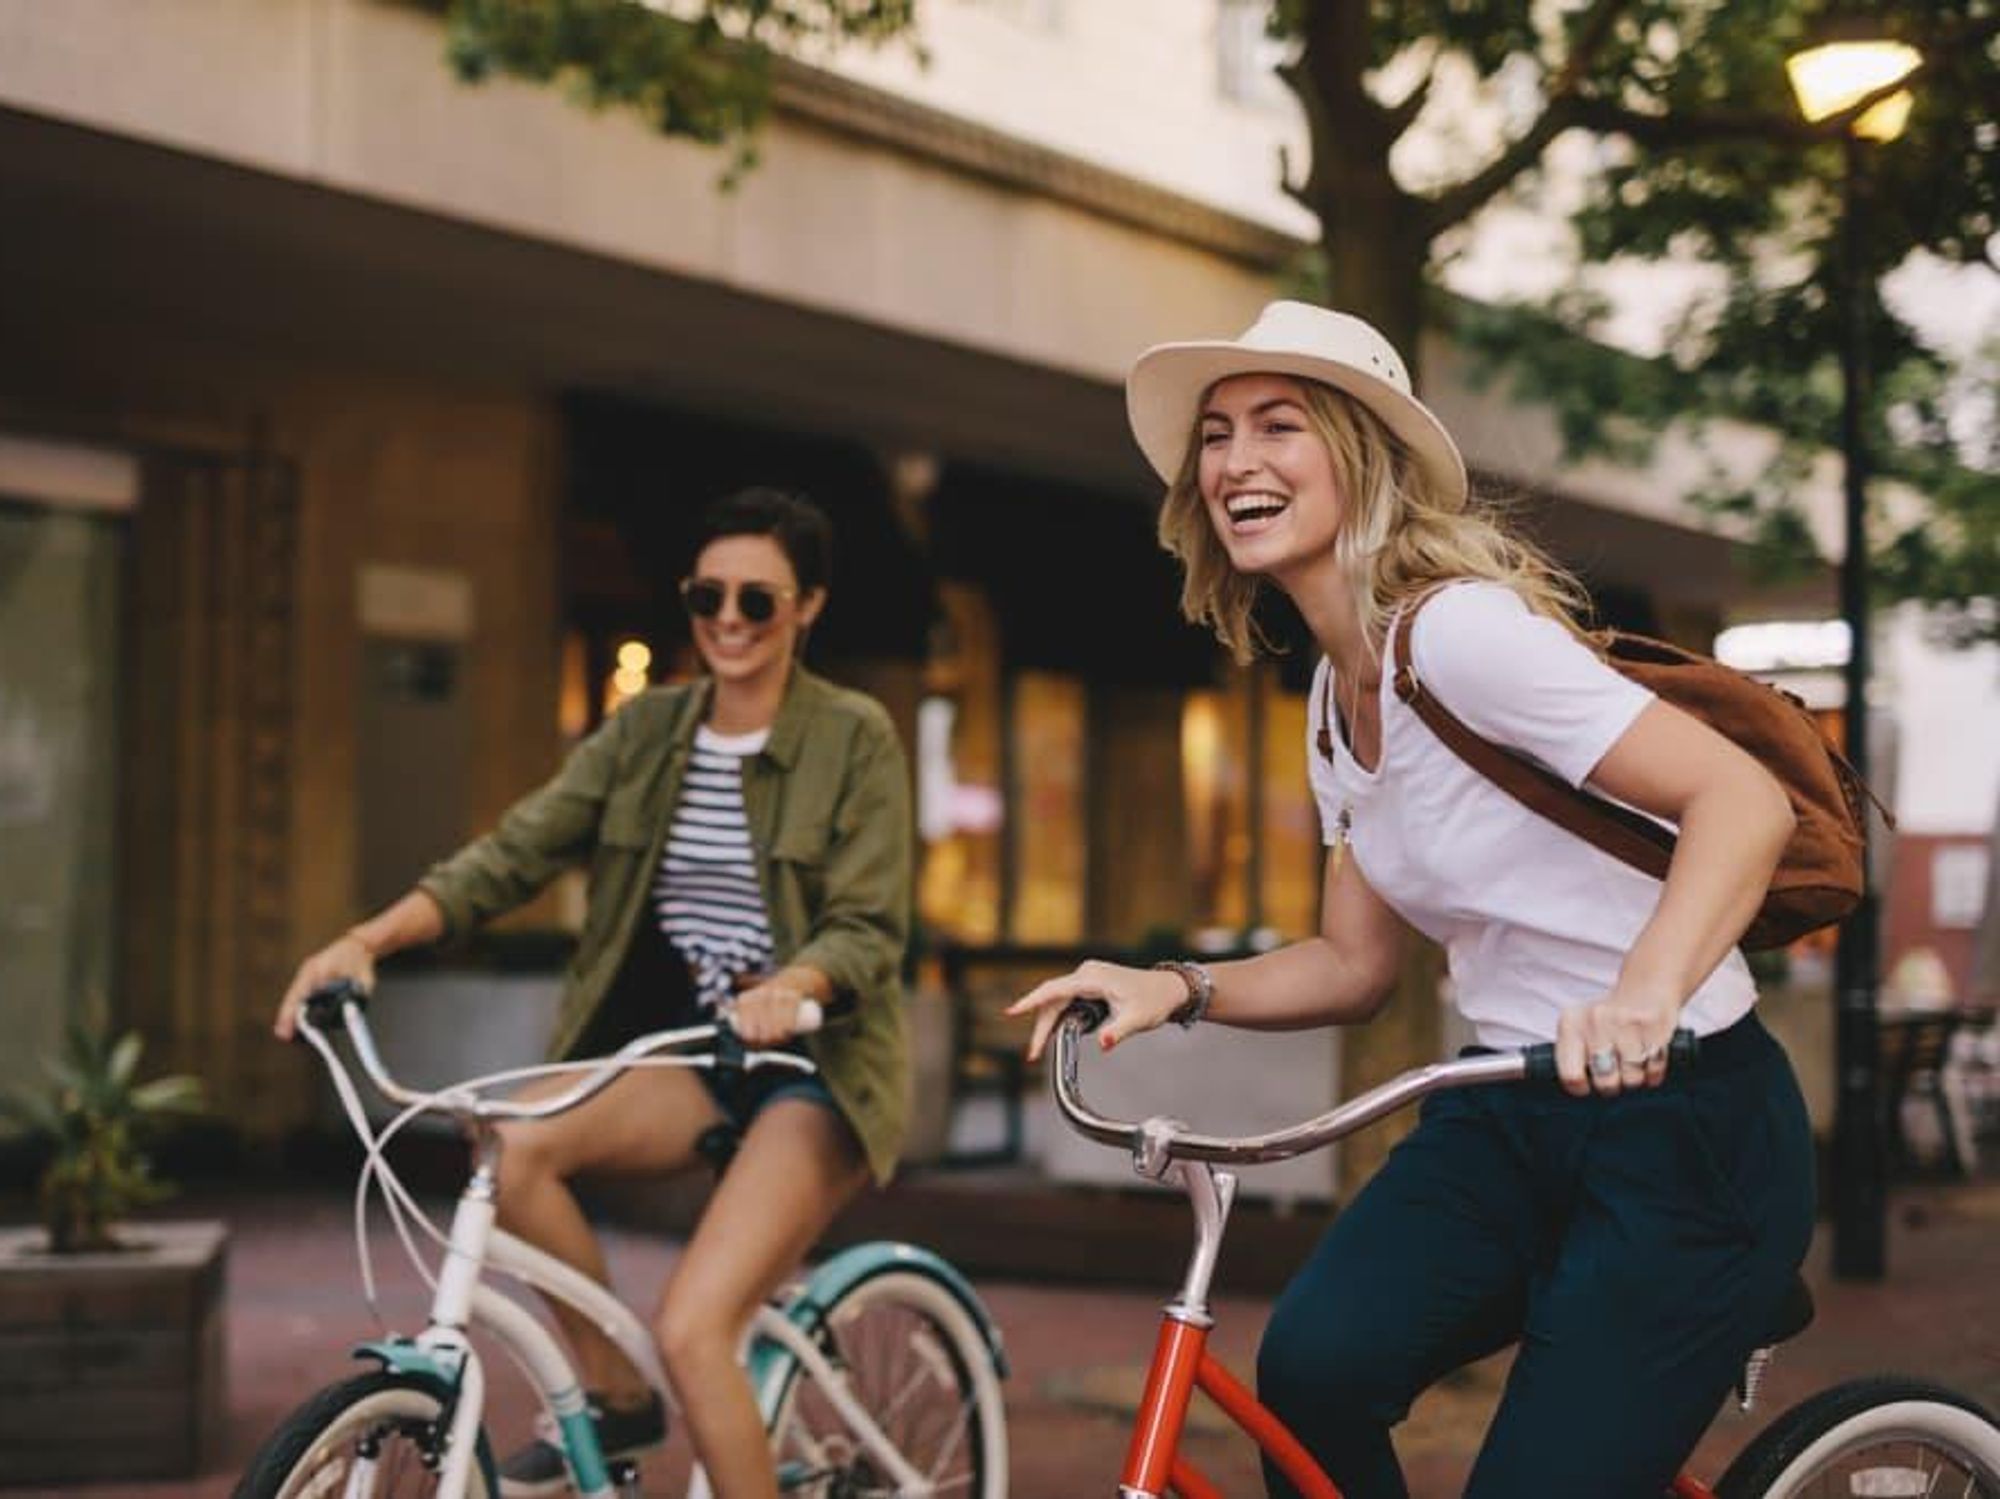 Two girls riding bikes